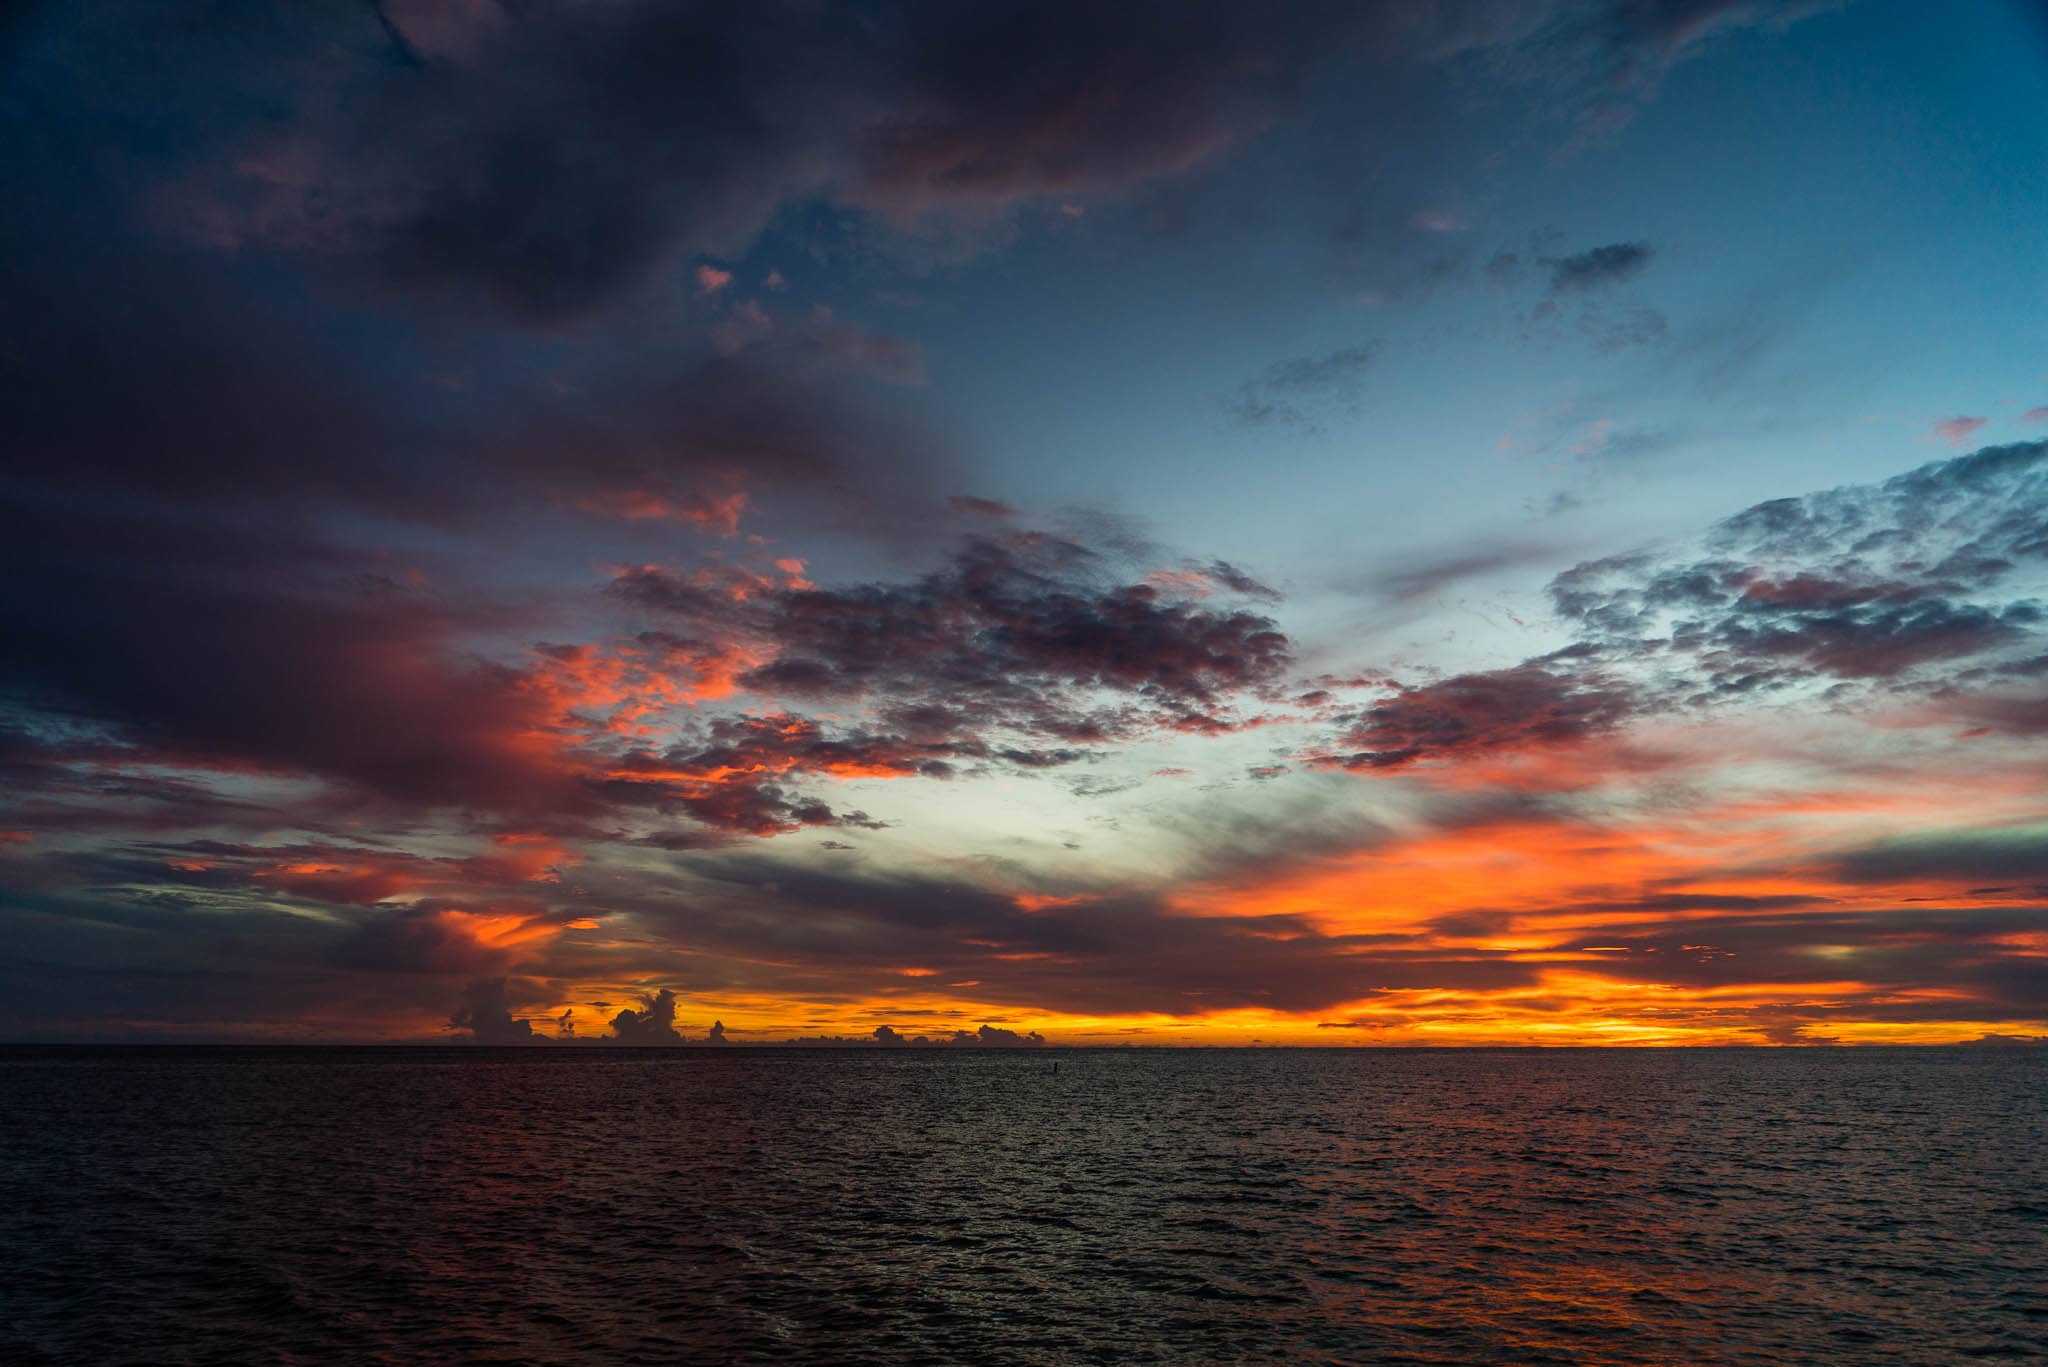 Caribbean Sunset at Sea by Patrick Bennett